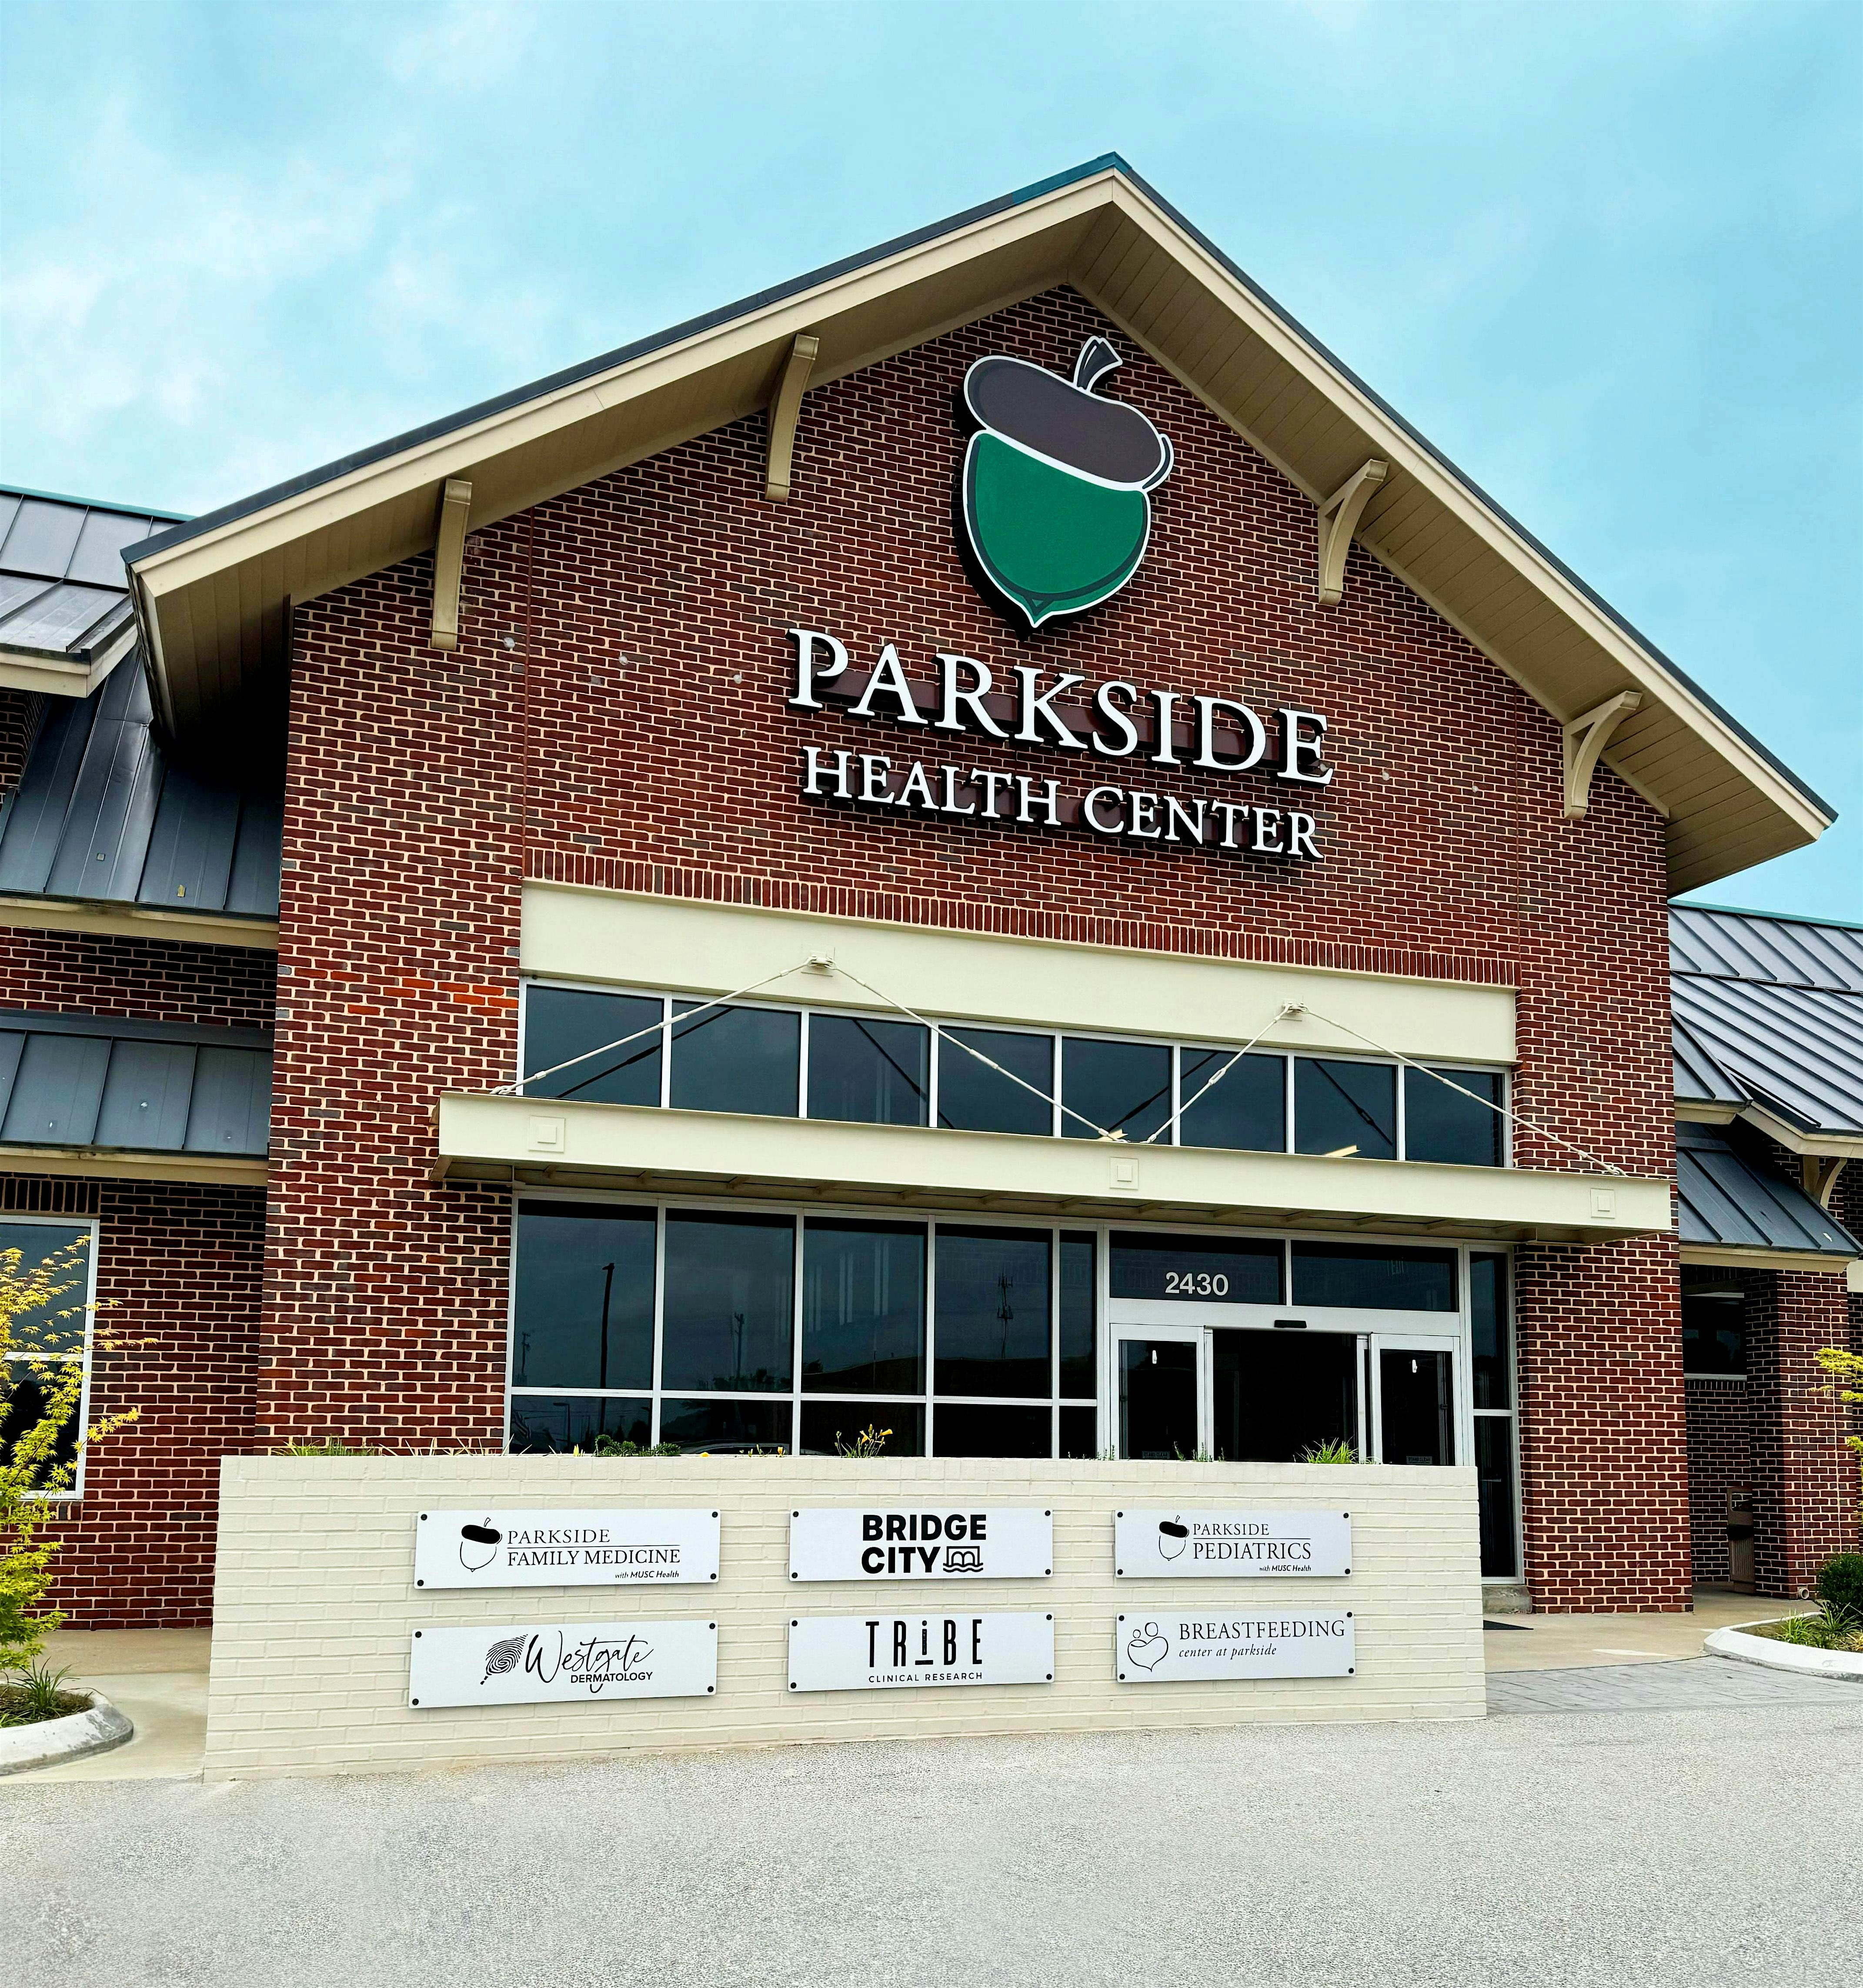 Parkside Health Center Open House